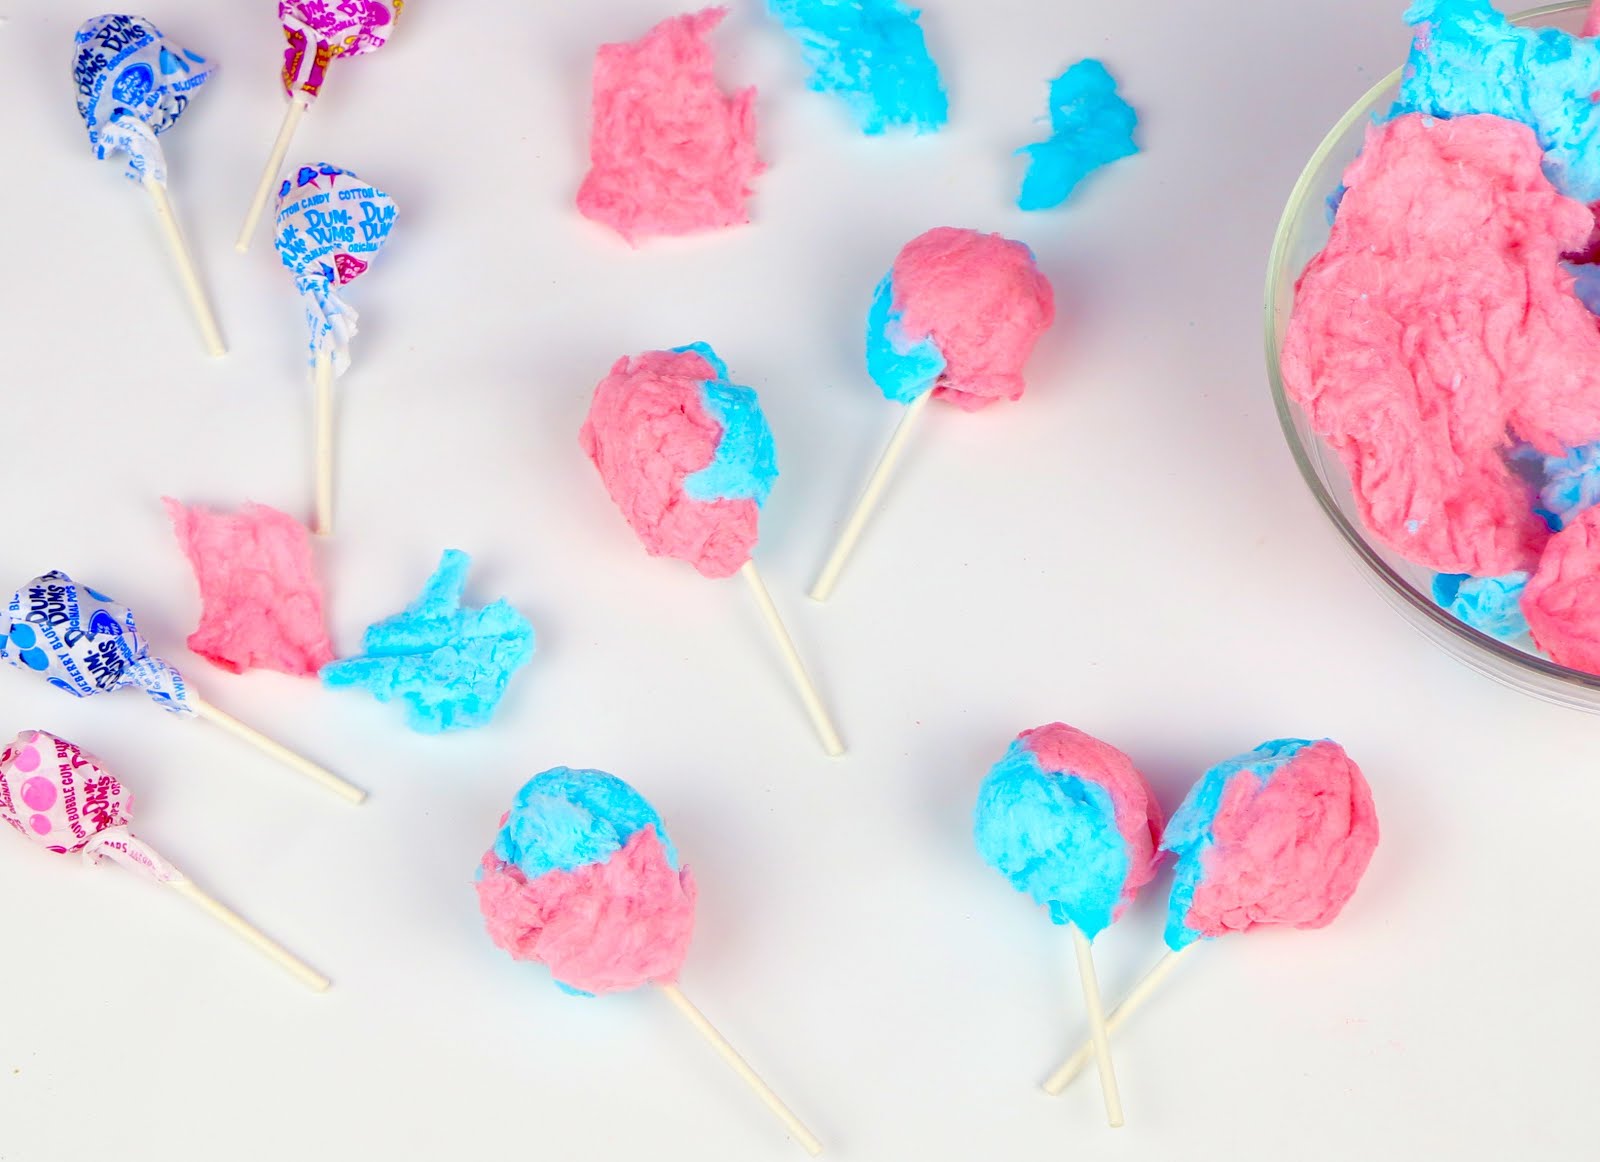 VIDEO Mini Cotton Candy Lollipops - The Lindsay Ann